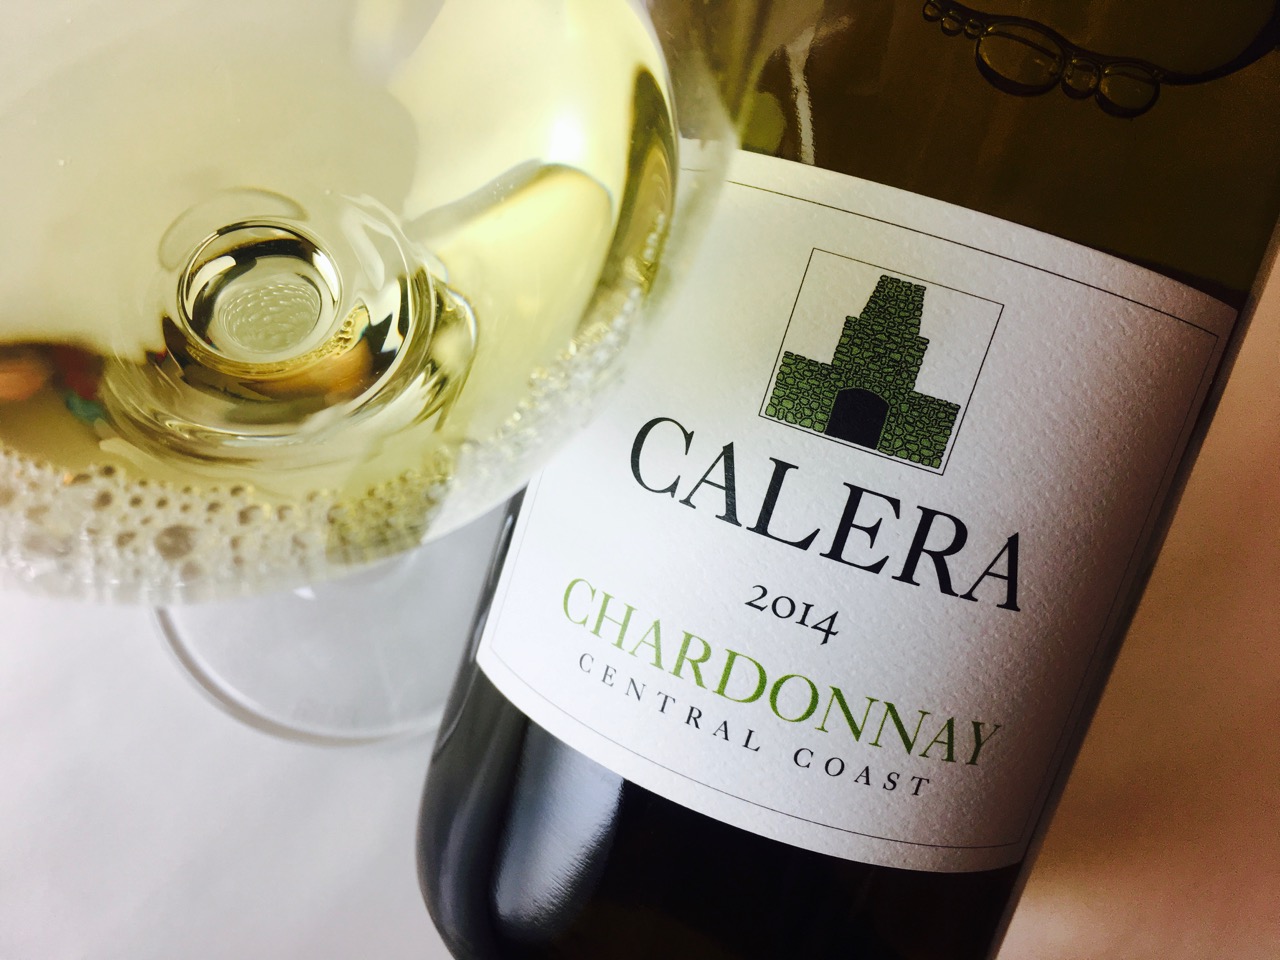 2014 Calera Chardonnay Central Coast